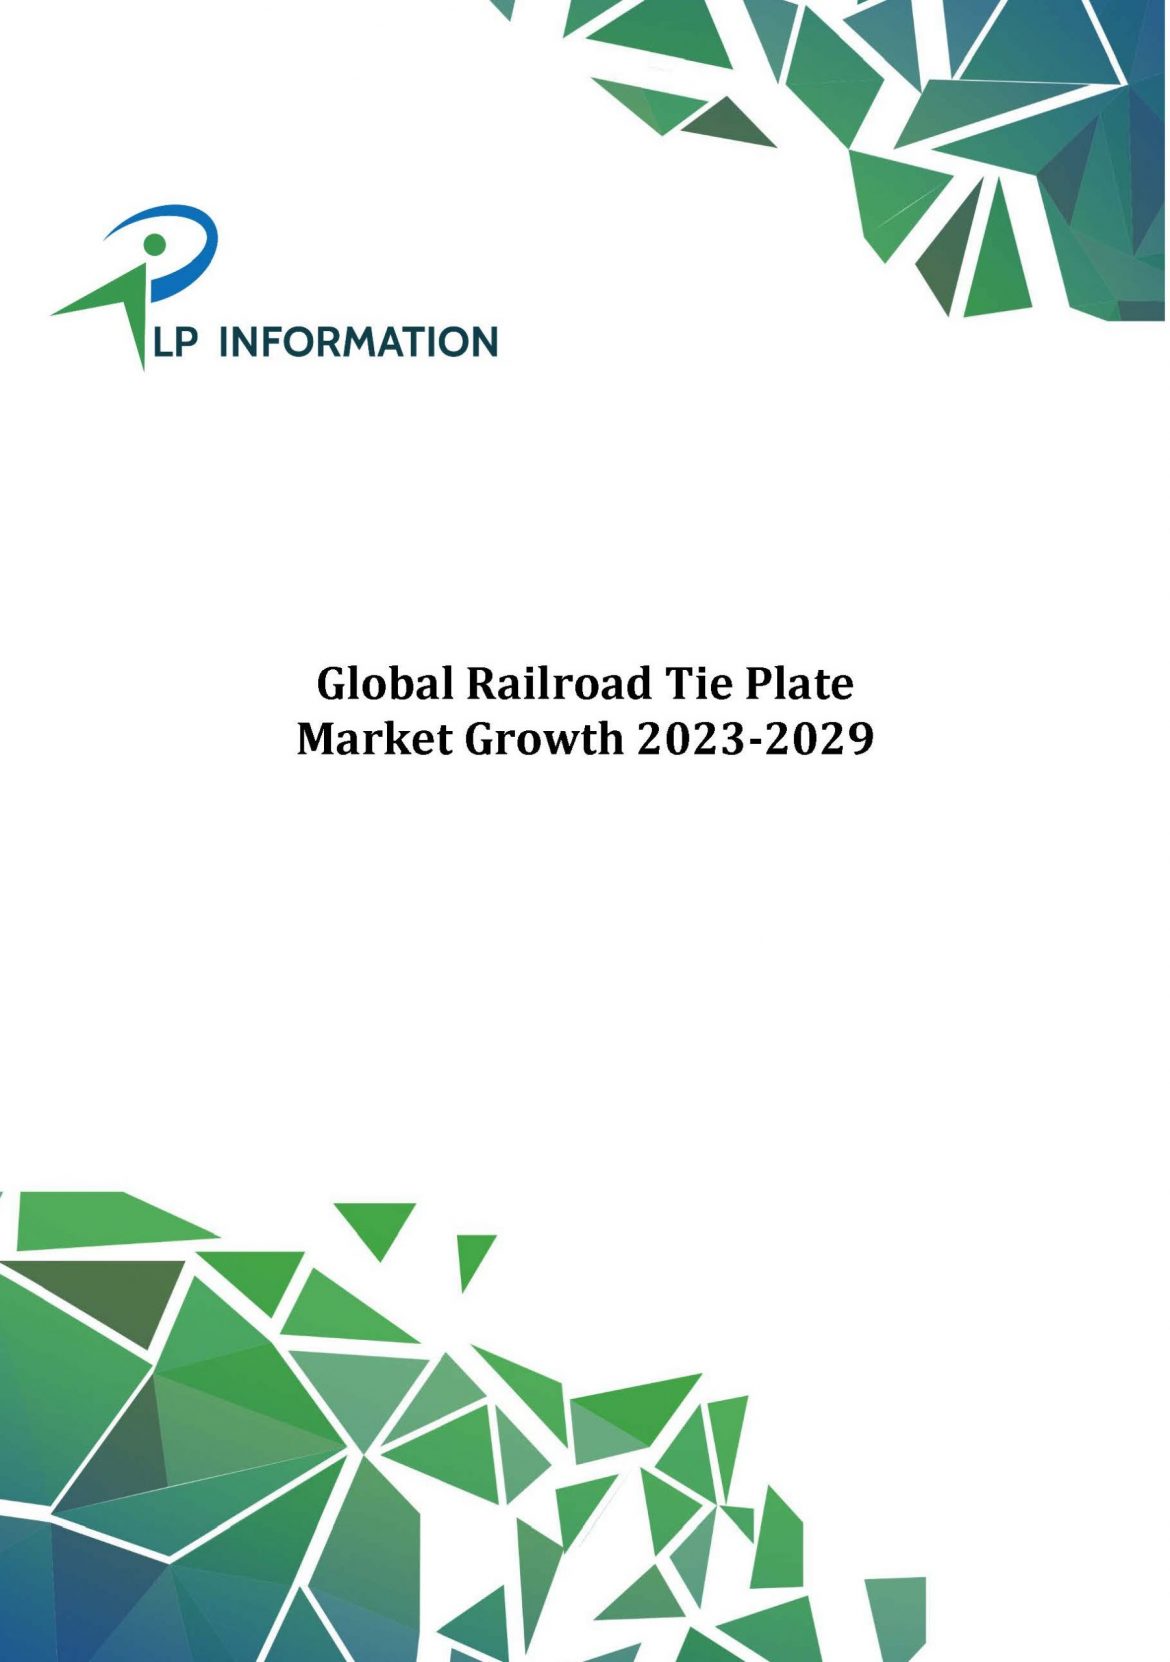 Global Railroad Tie Plate Market Growth 2023-2029